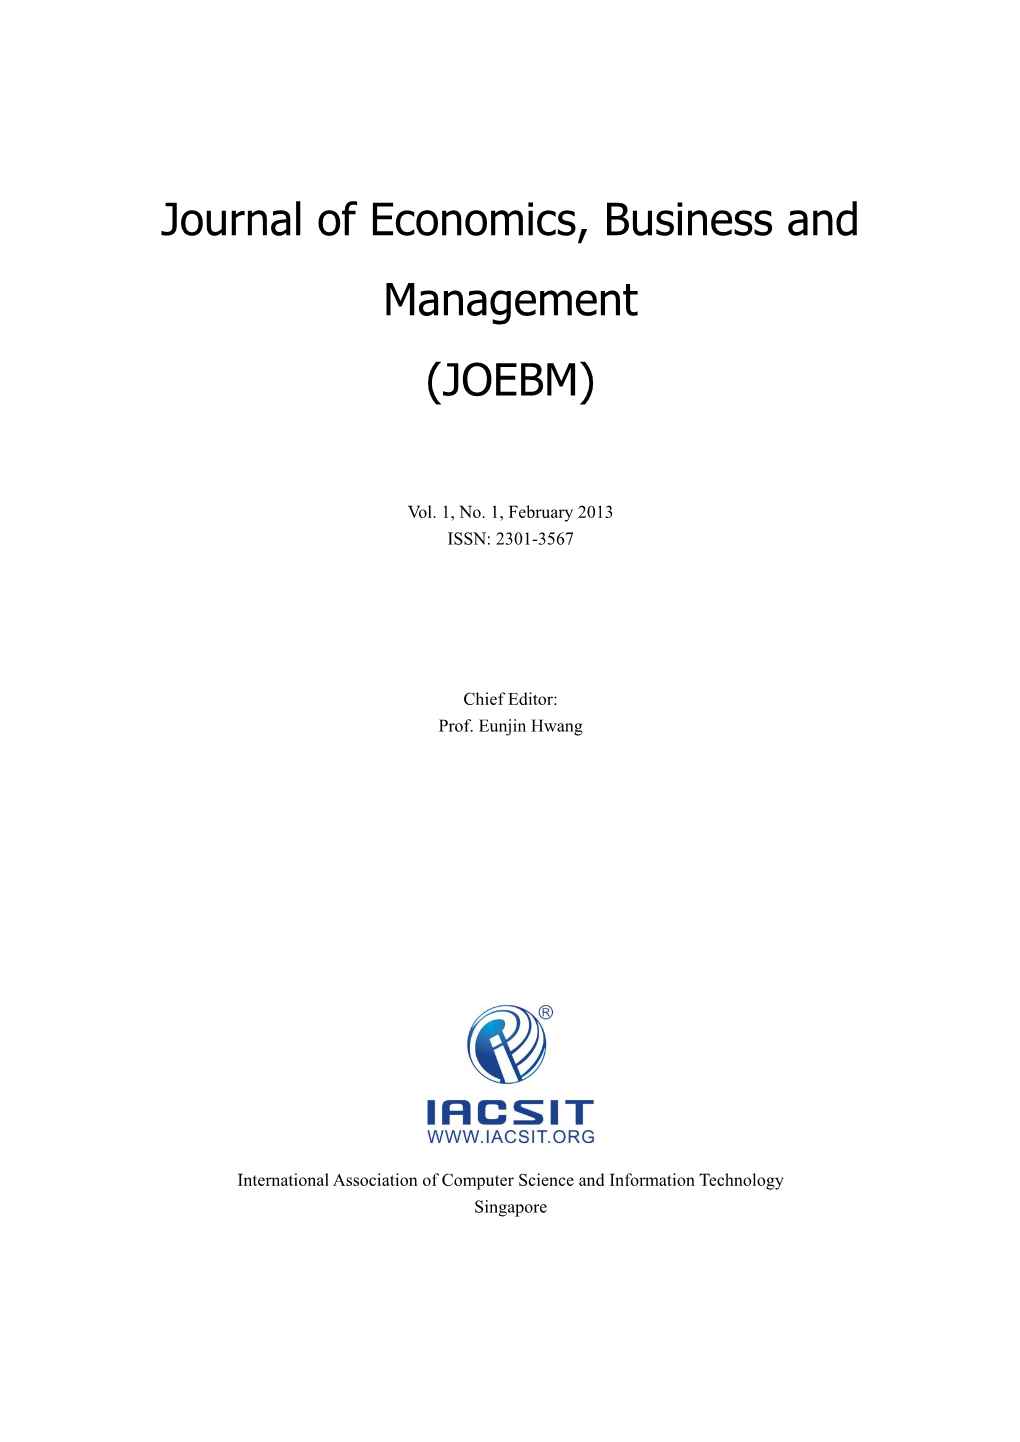 Journal of Economics, Business and Management (JOEBM)